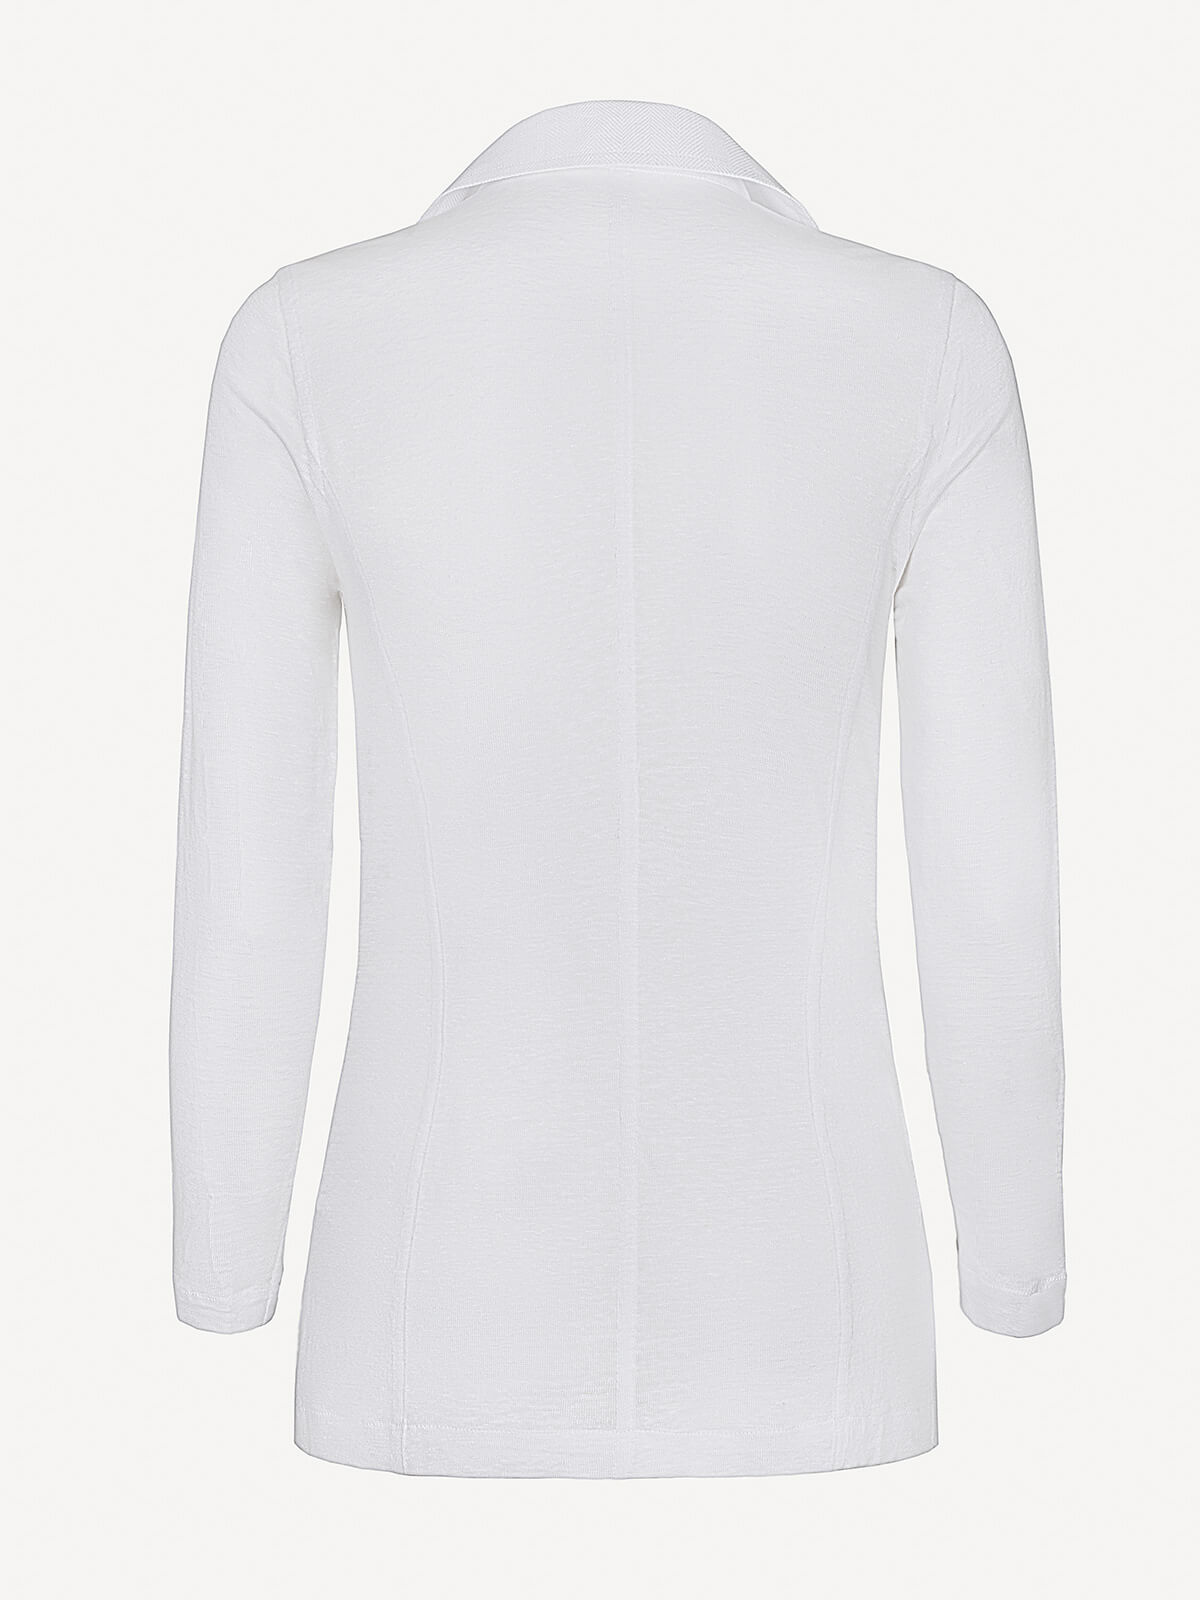 Giacca Sud Woman 100% Capri white linen jacket back